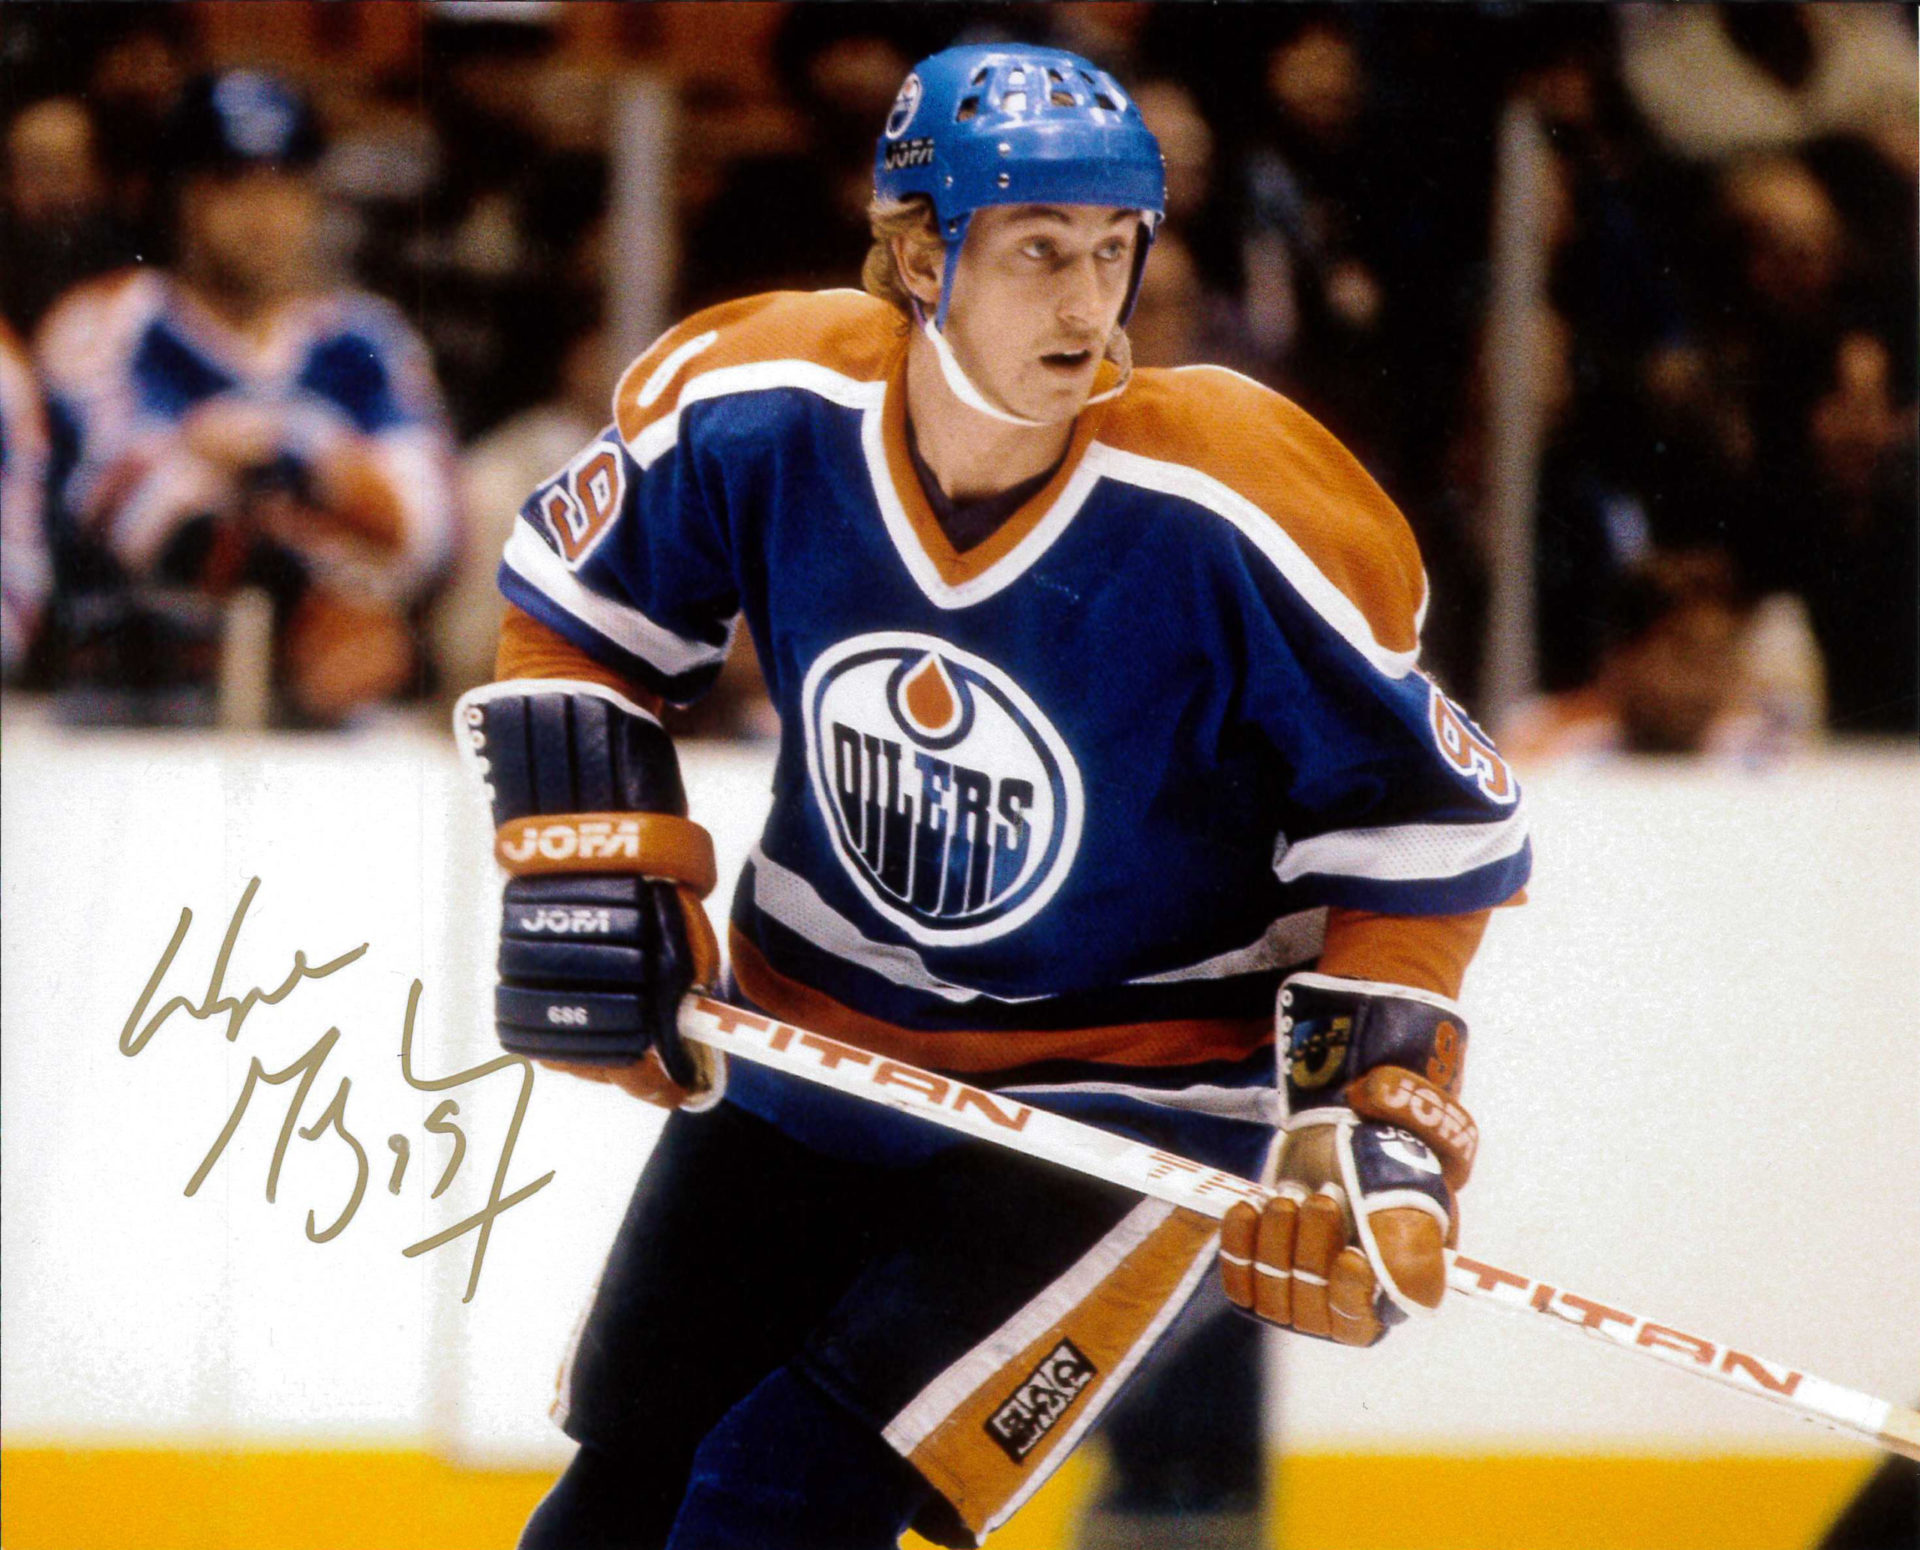 1993 Team Canada Wayne Gretzky signed jersey.